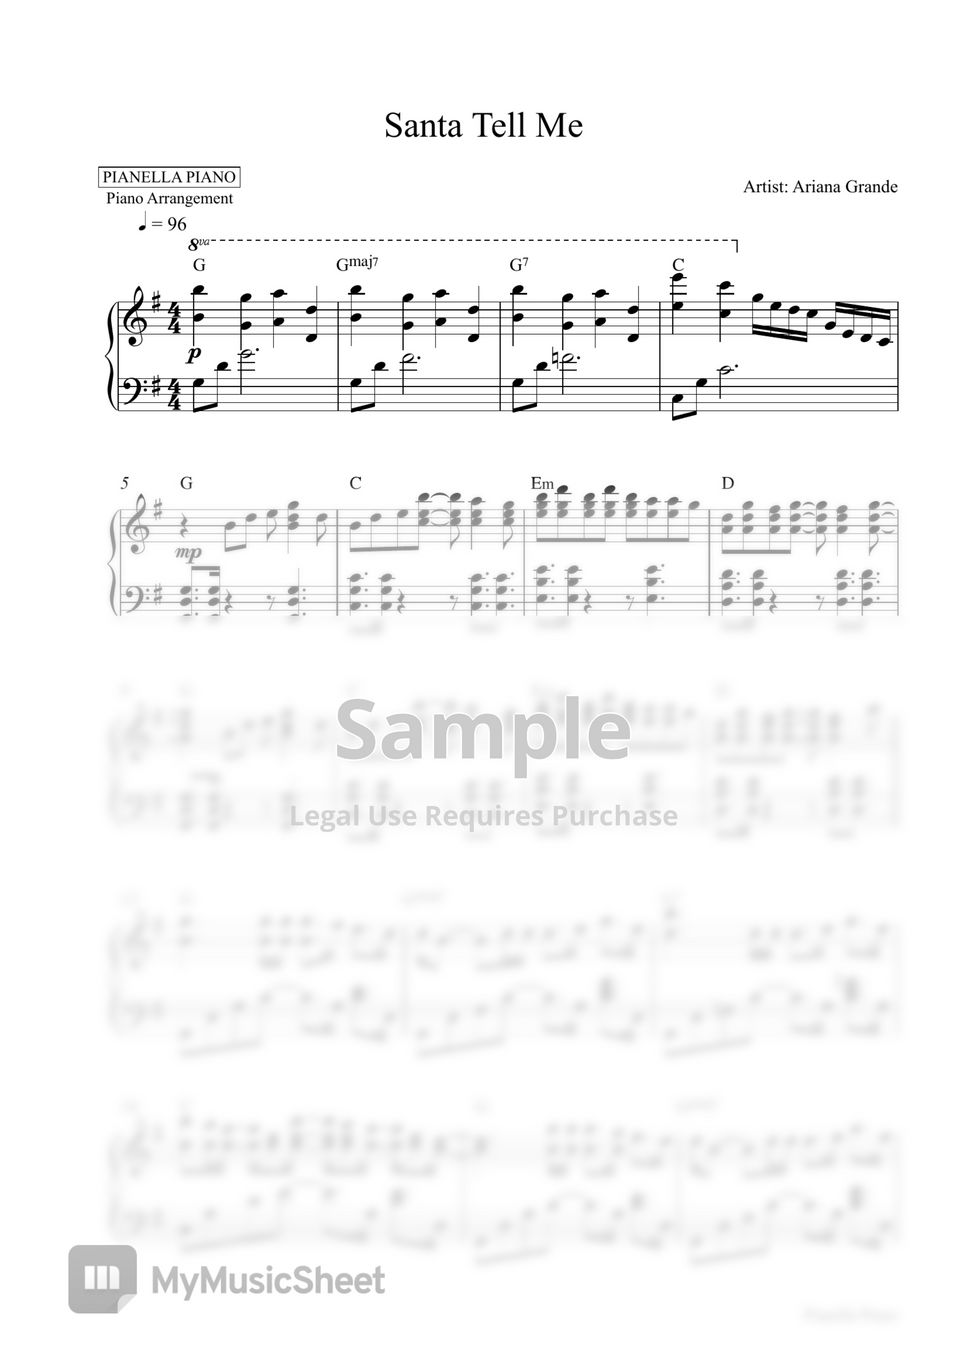 Ariana Grande - Santa Tell Me (Piano Sheet) by Pianella Piano